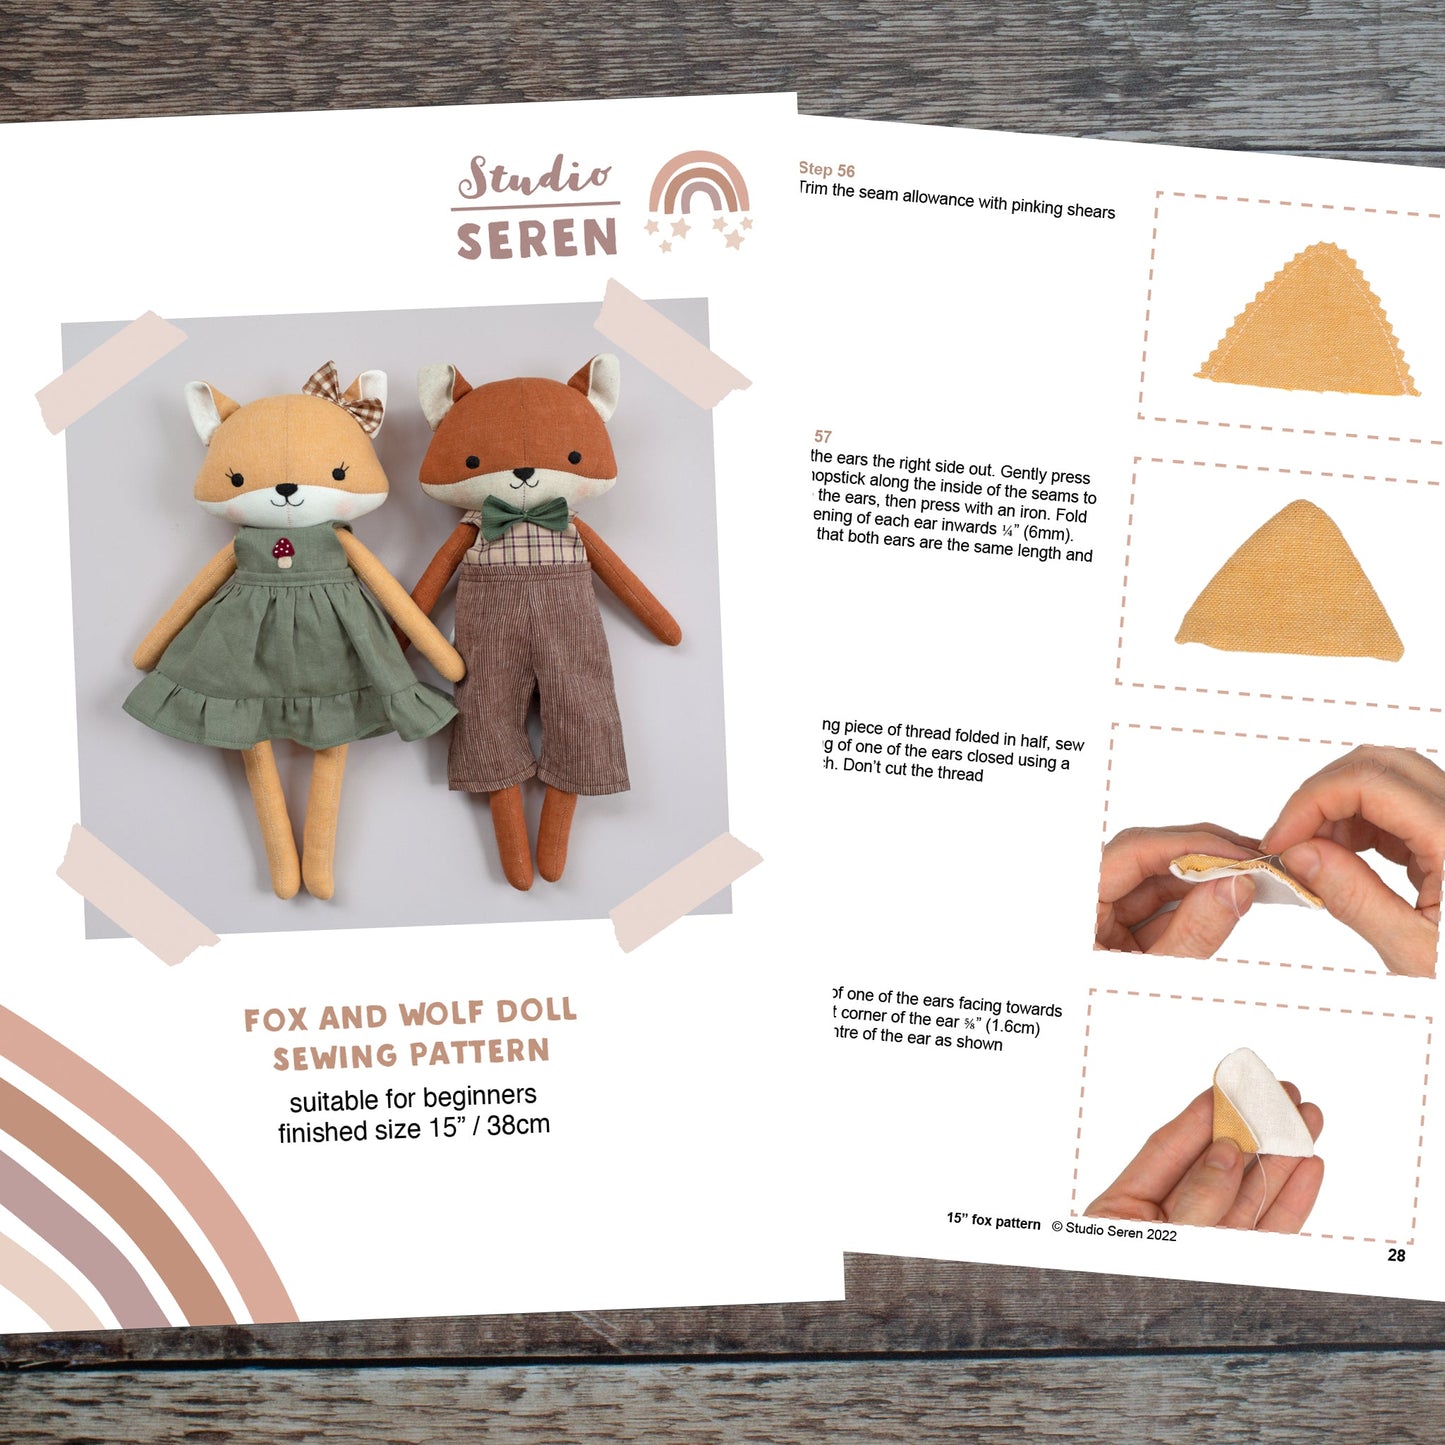 SEWING PATTERN - Sew Stuffed Animal Soft Toy - Kawaii Fox Wolf Bear Bunny -  8188